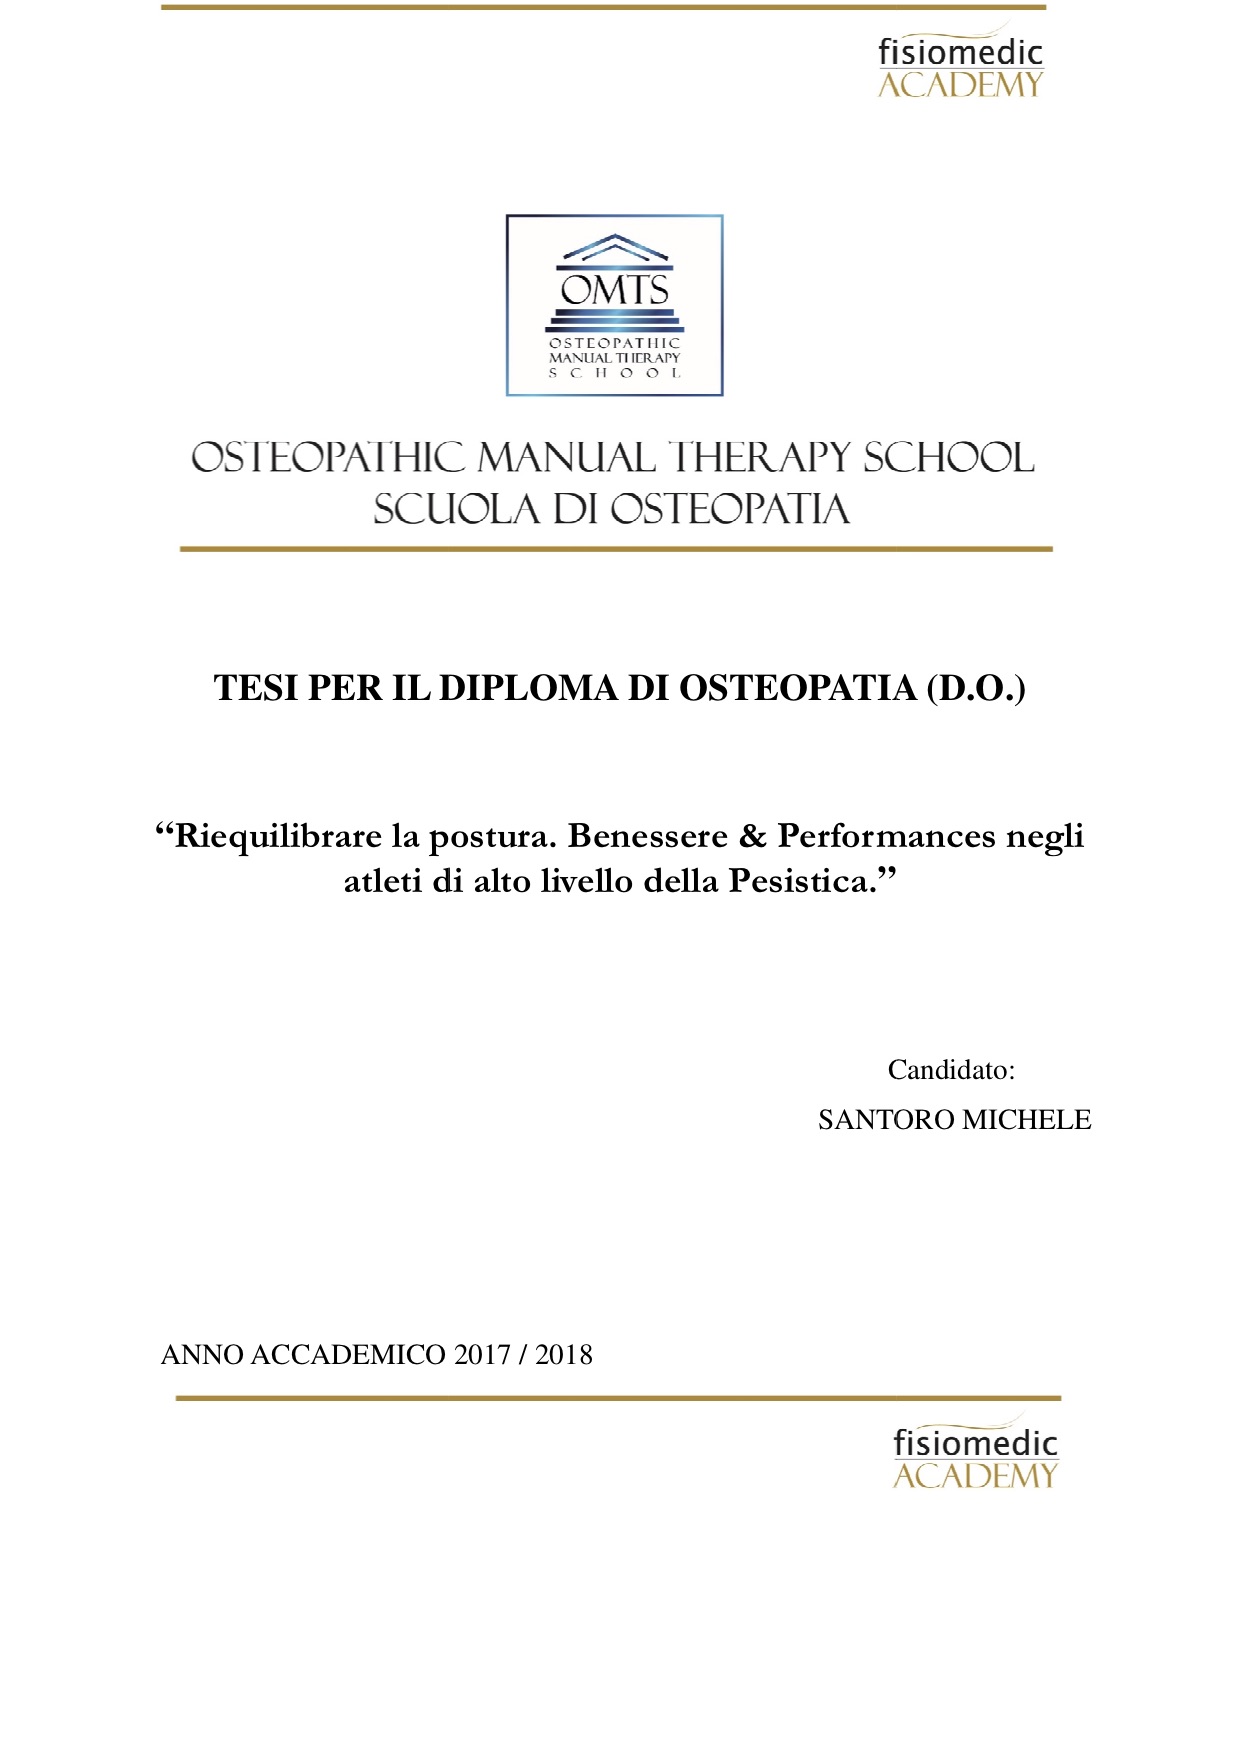 Santoro Michele Tesi Diploma Osteopatia 2018